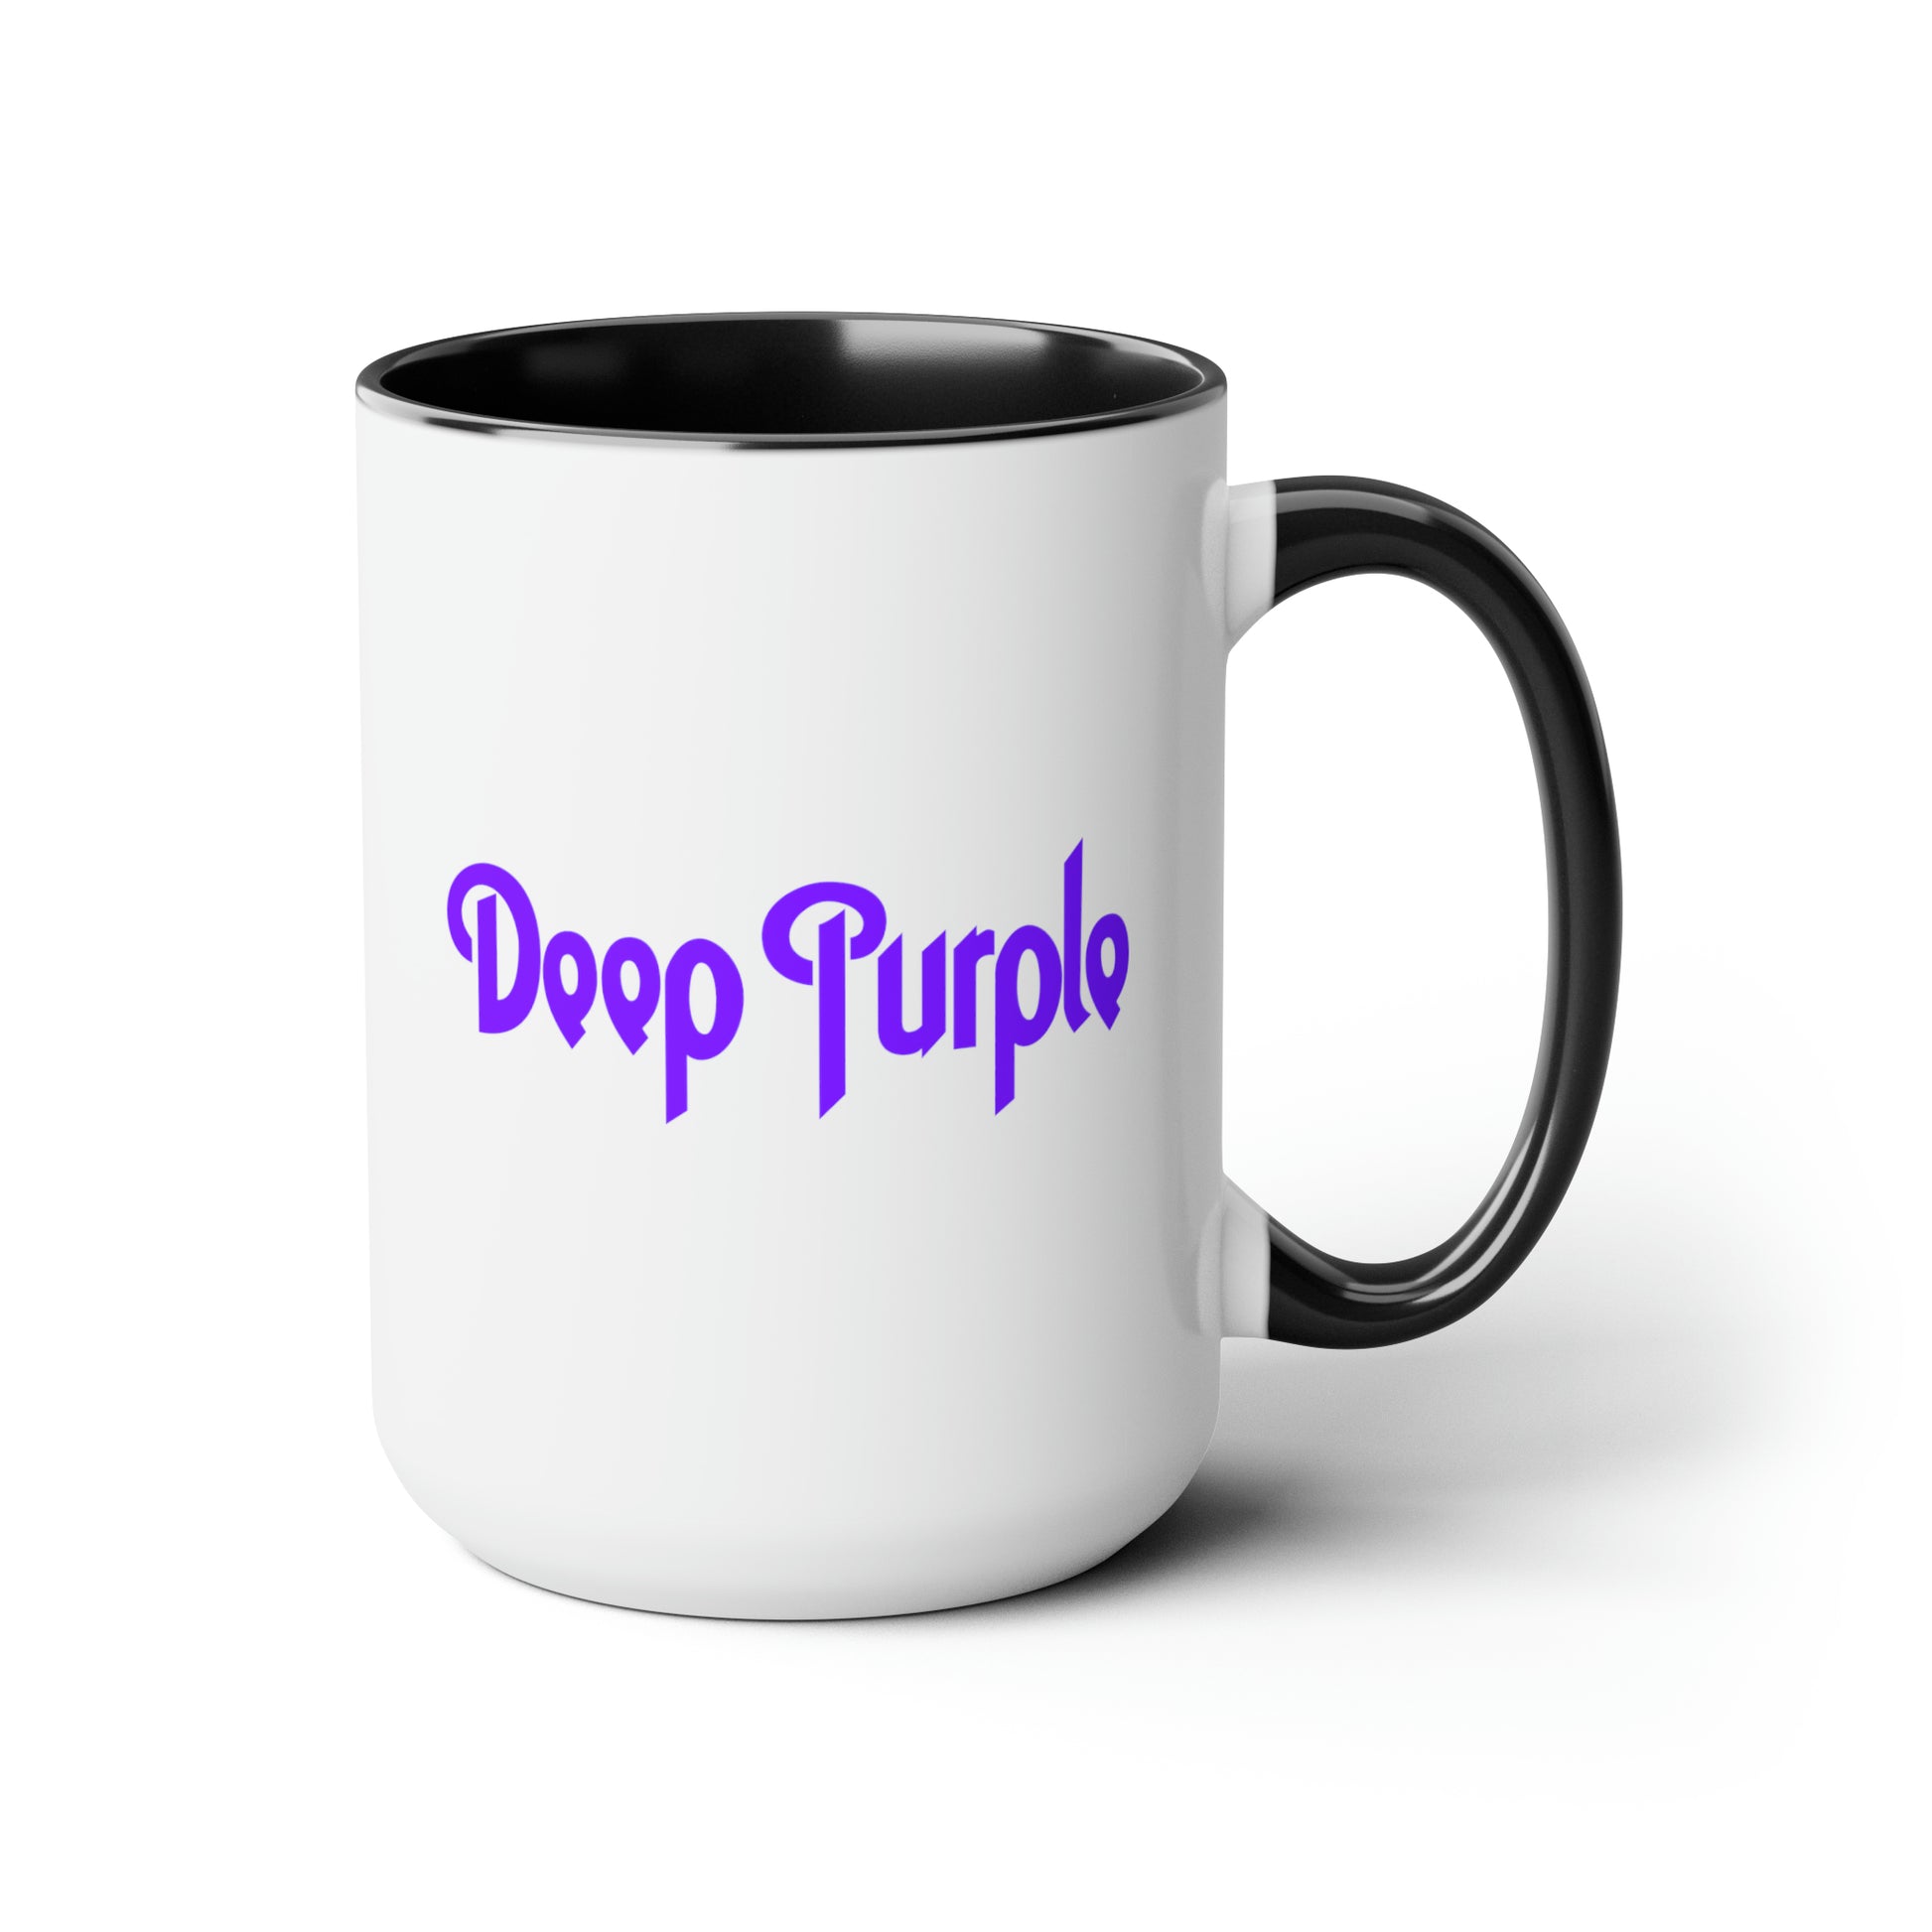 Deep Purple Coffee Mug - Double Sided Black Accent White Ceramic 15oz by TheGlassyLass